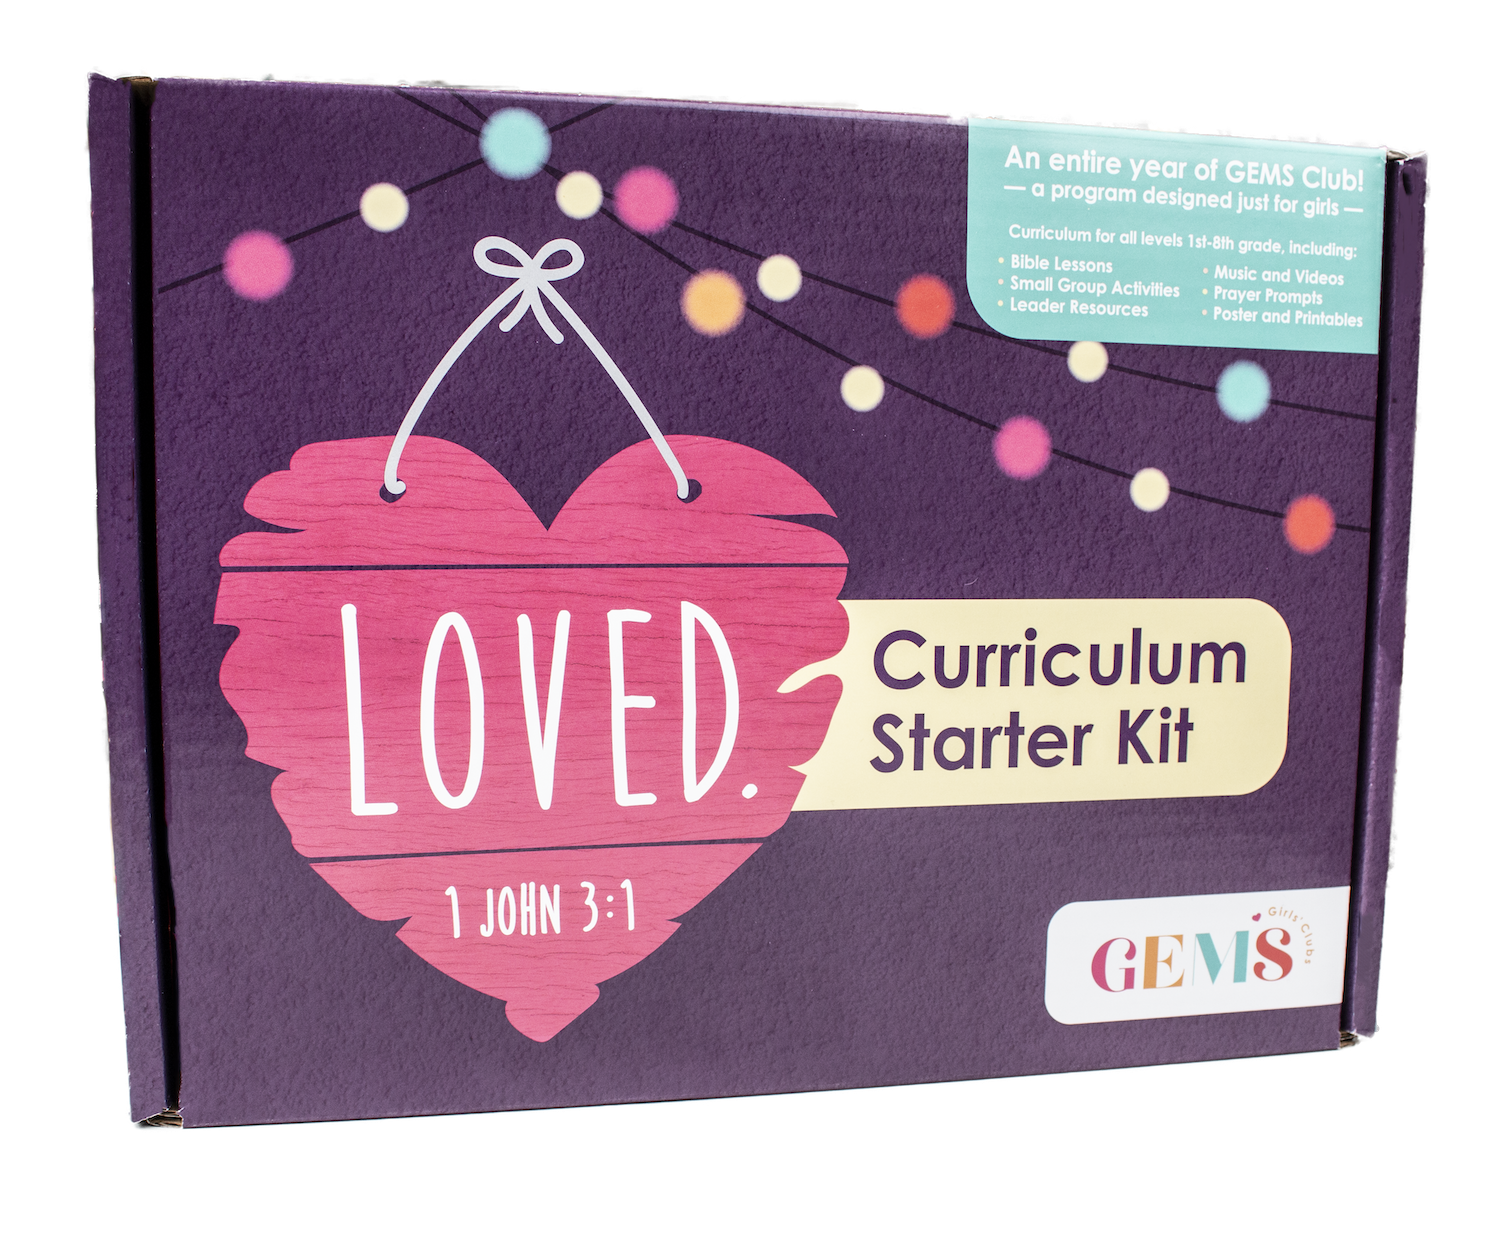 LOVED. Curriculum Starter Kit